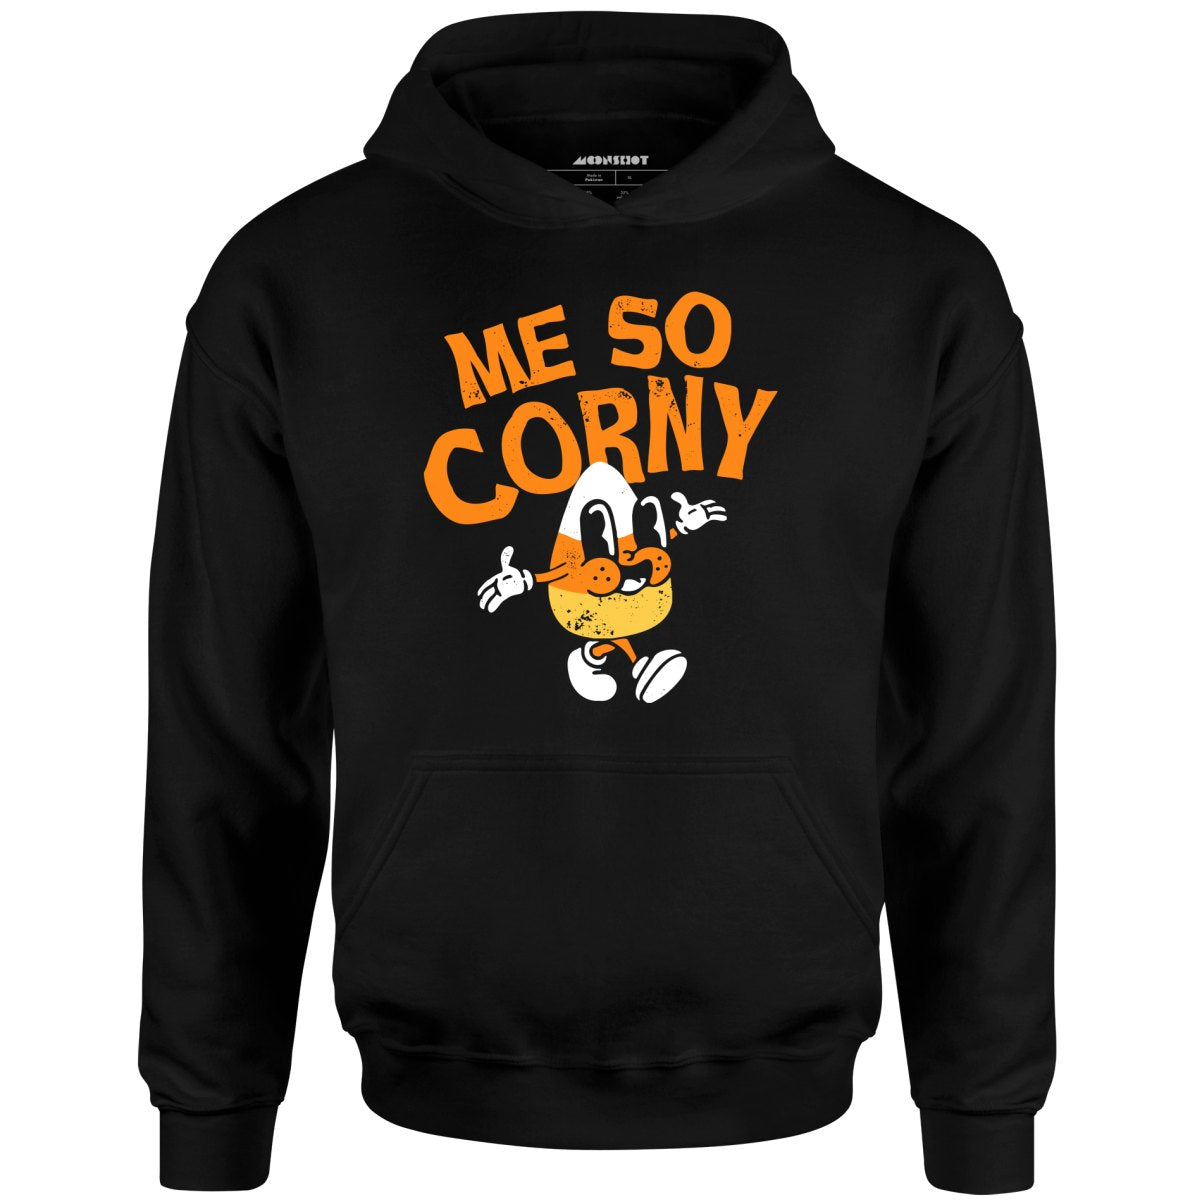 Me So Corny v2 - Unisex Hoodie